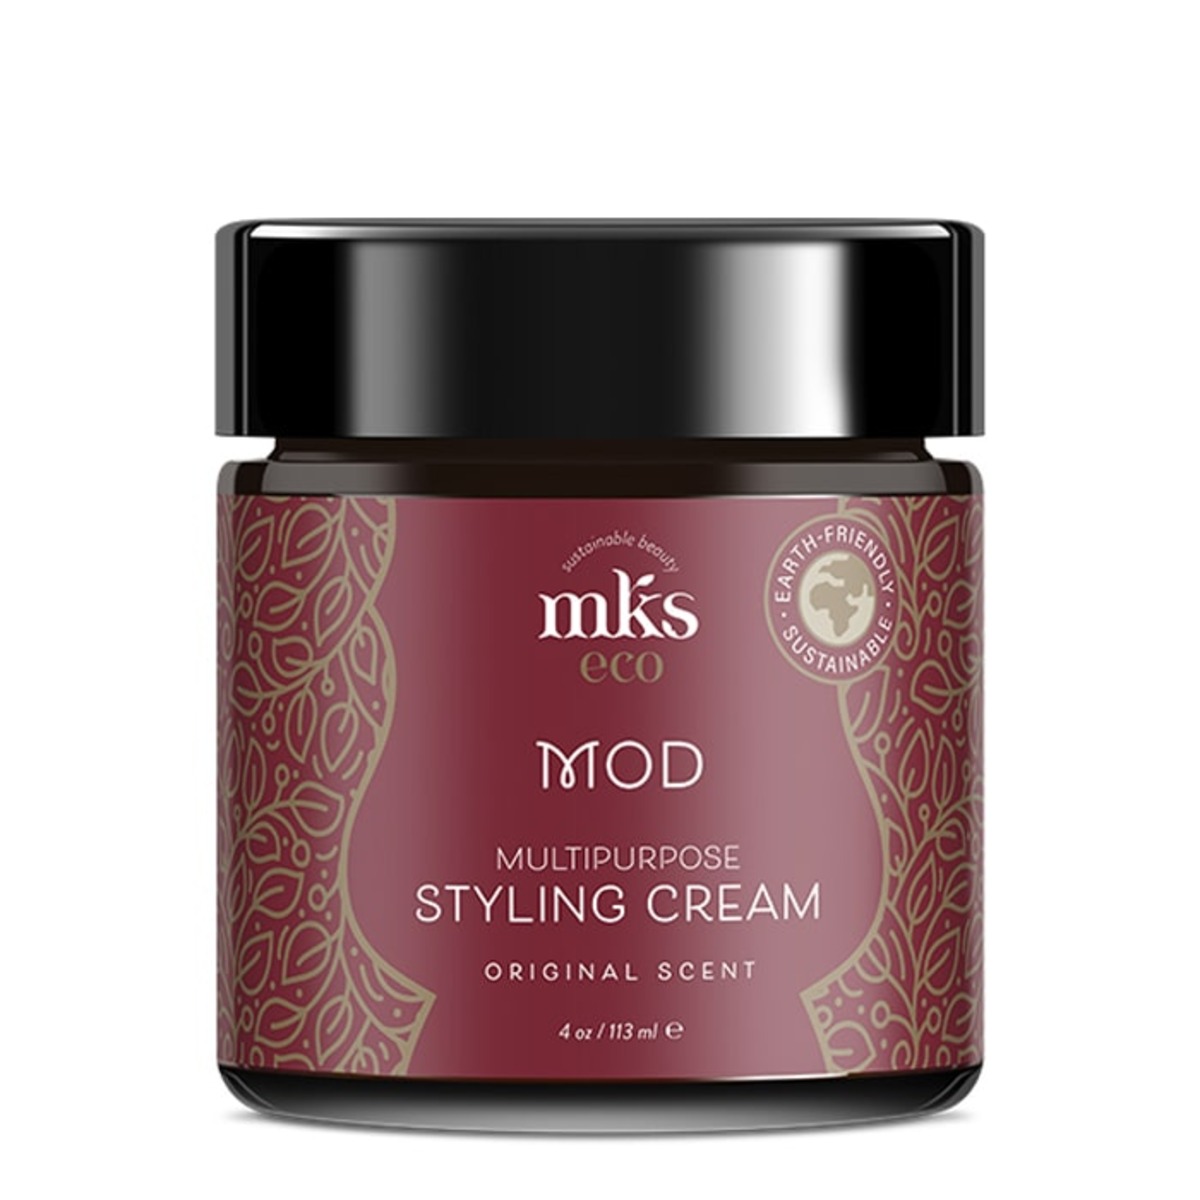 MKS Мултифункционален стилизиращ крем Eco MOD Multipurpose Styling Cream, 113 гр